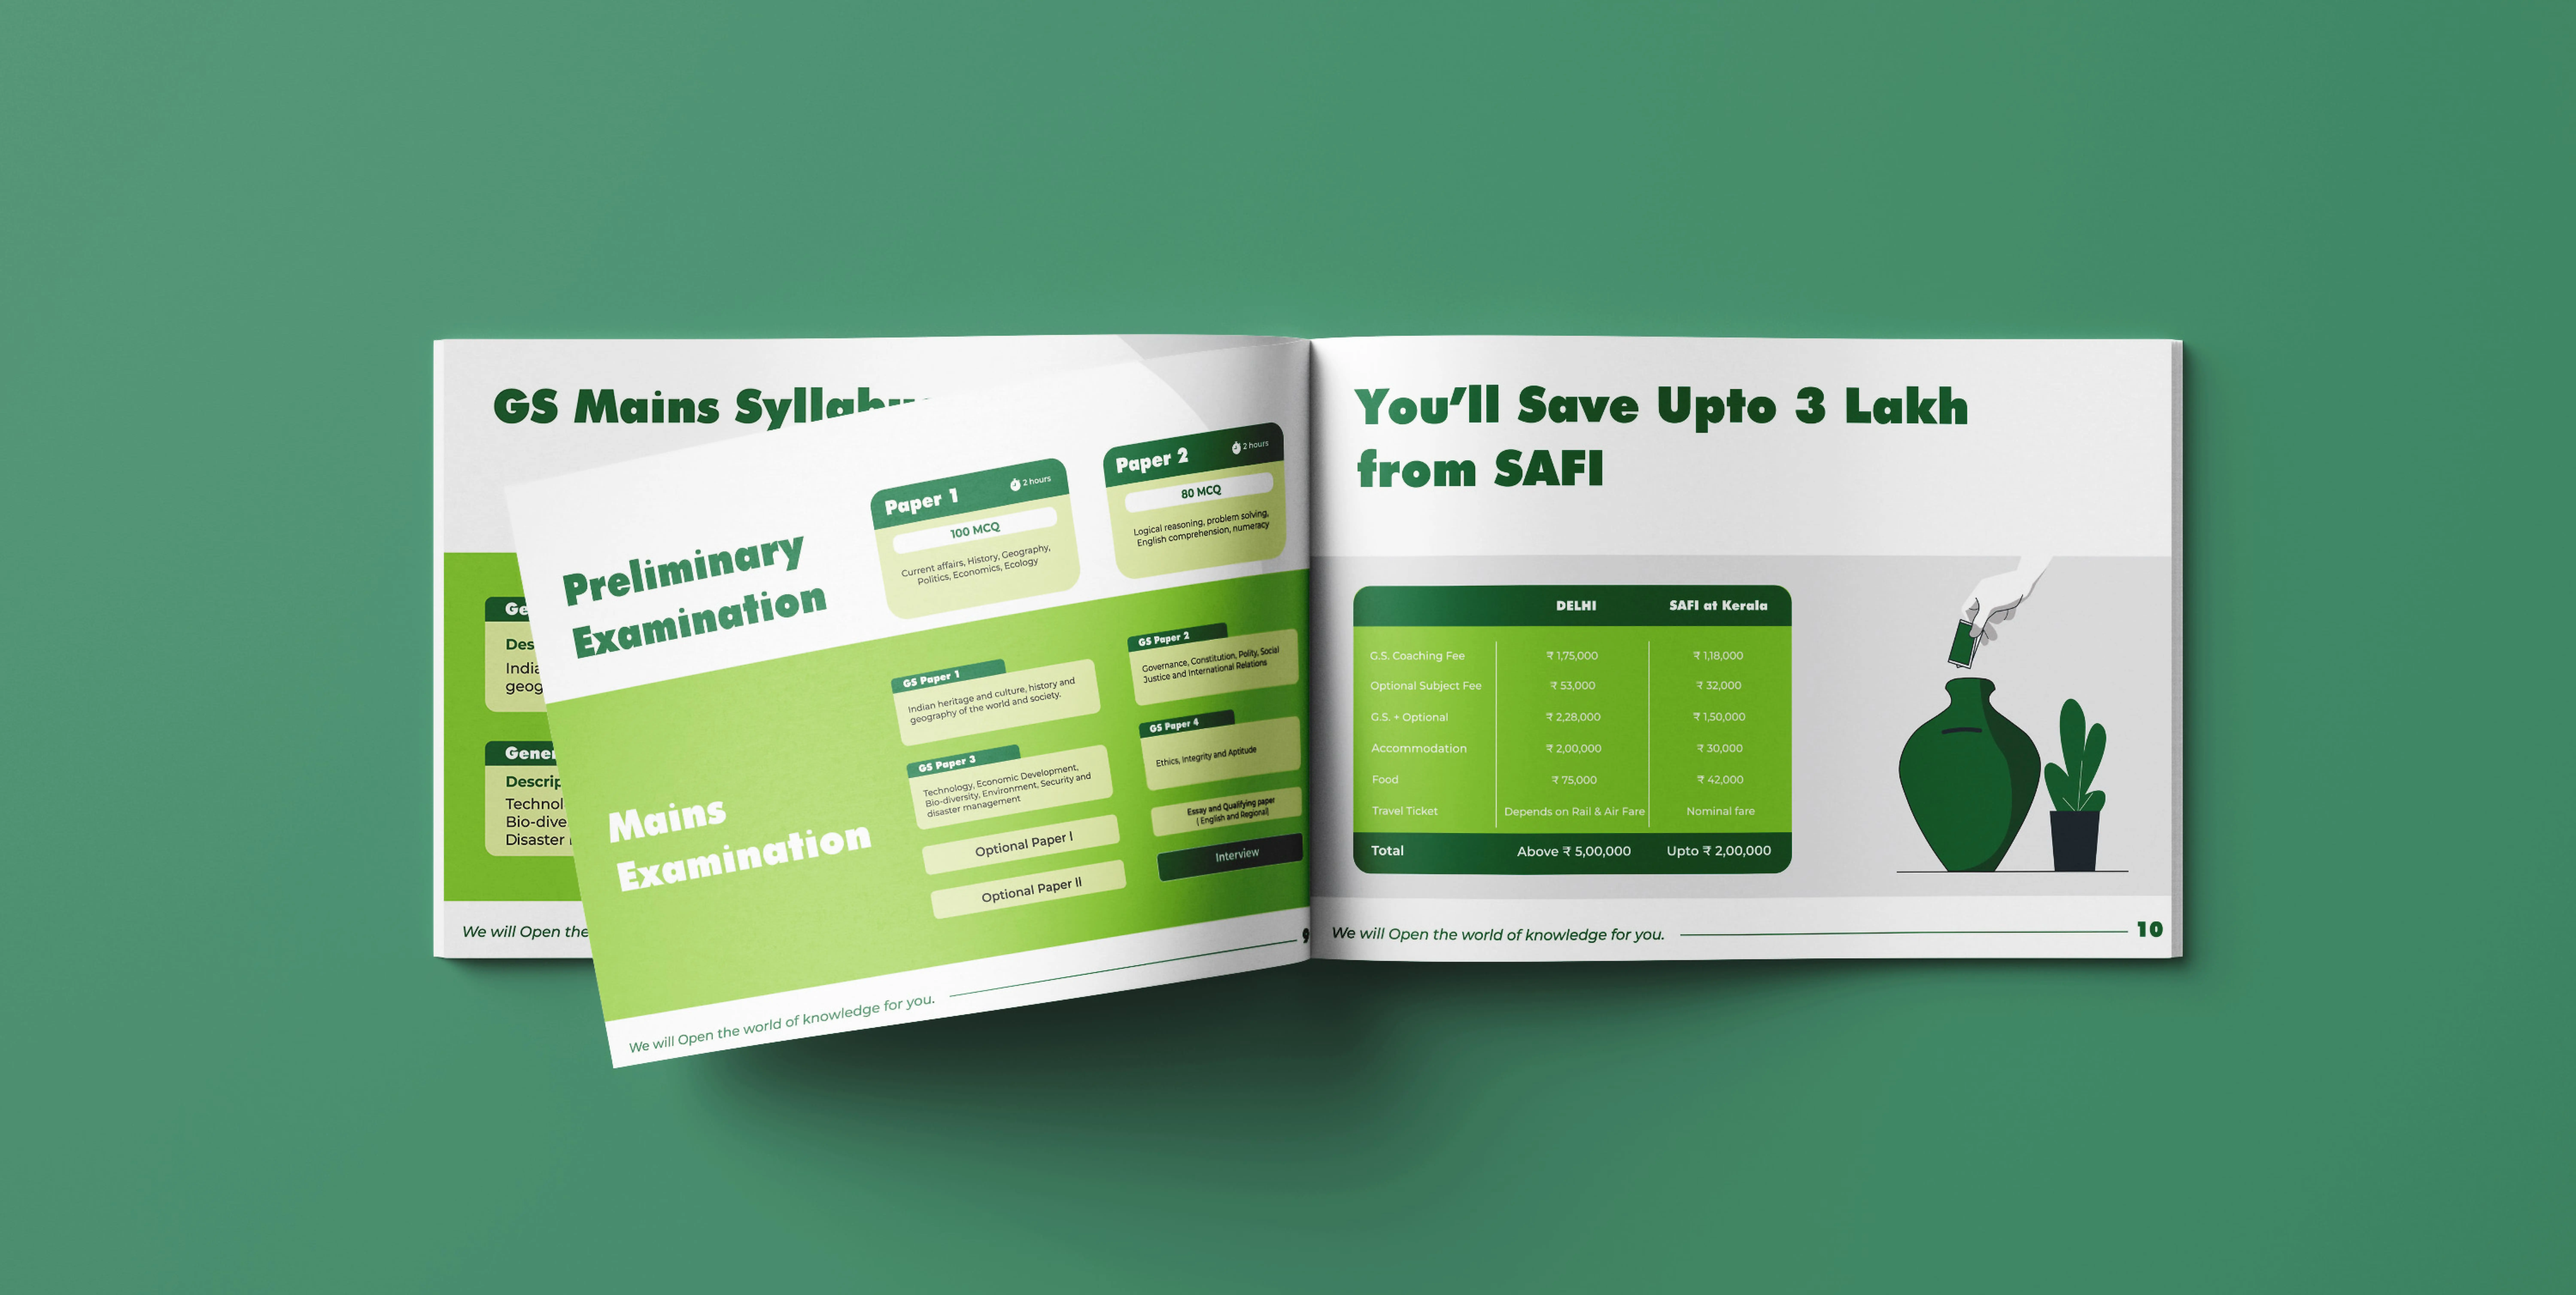 SAFI IAS Brochure - Image de marque & branding